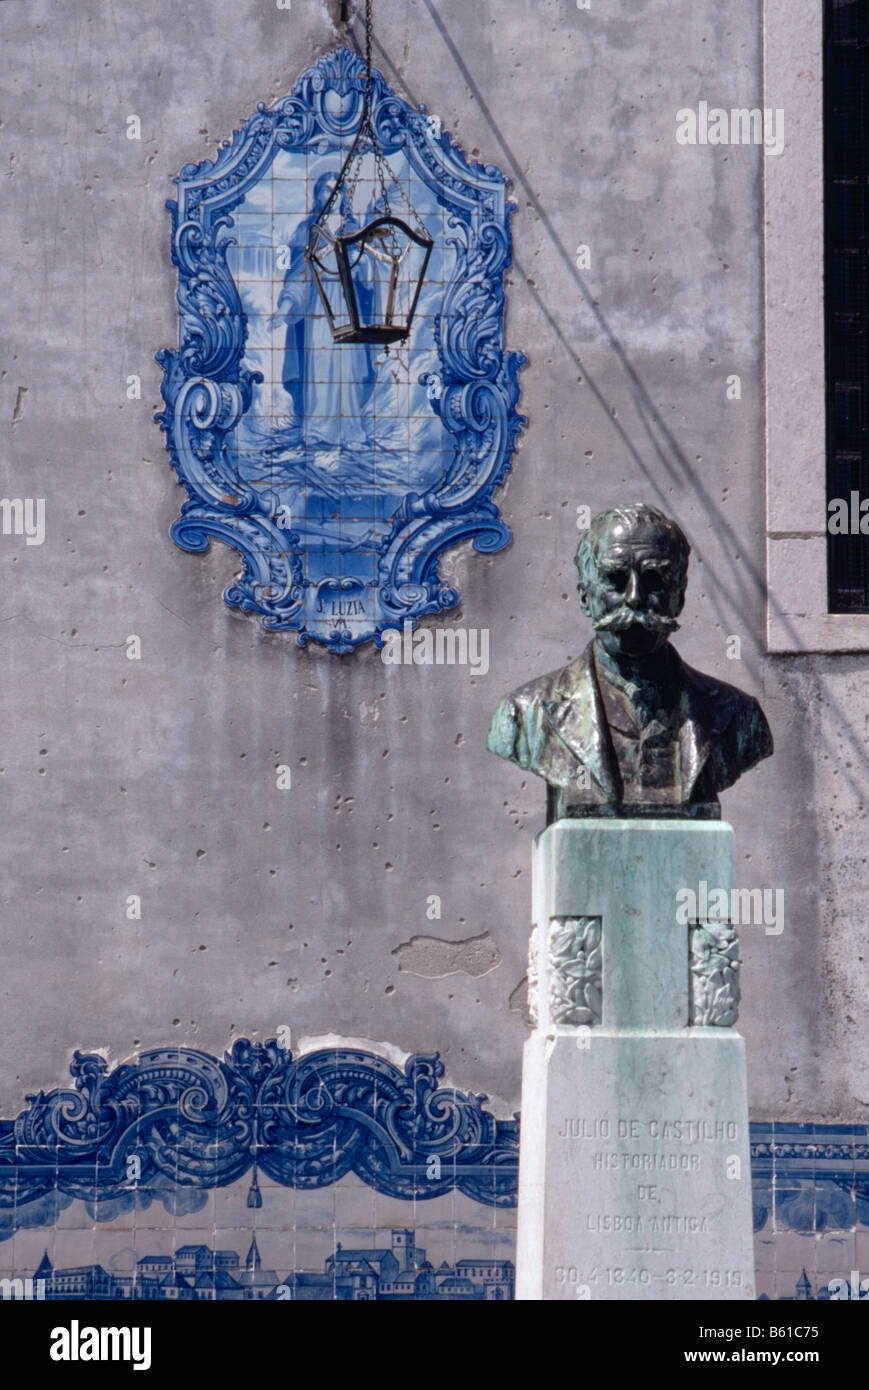 A bust of the historian Julio de Castilho in the  Miradouro de Santa Luzia Park, Alfama, Lisbon Stock Photo